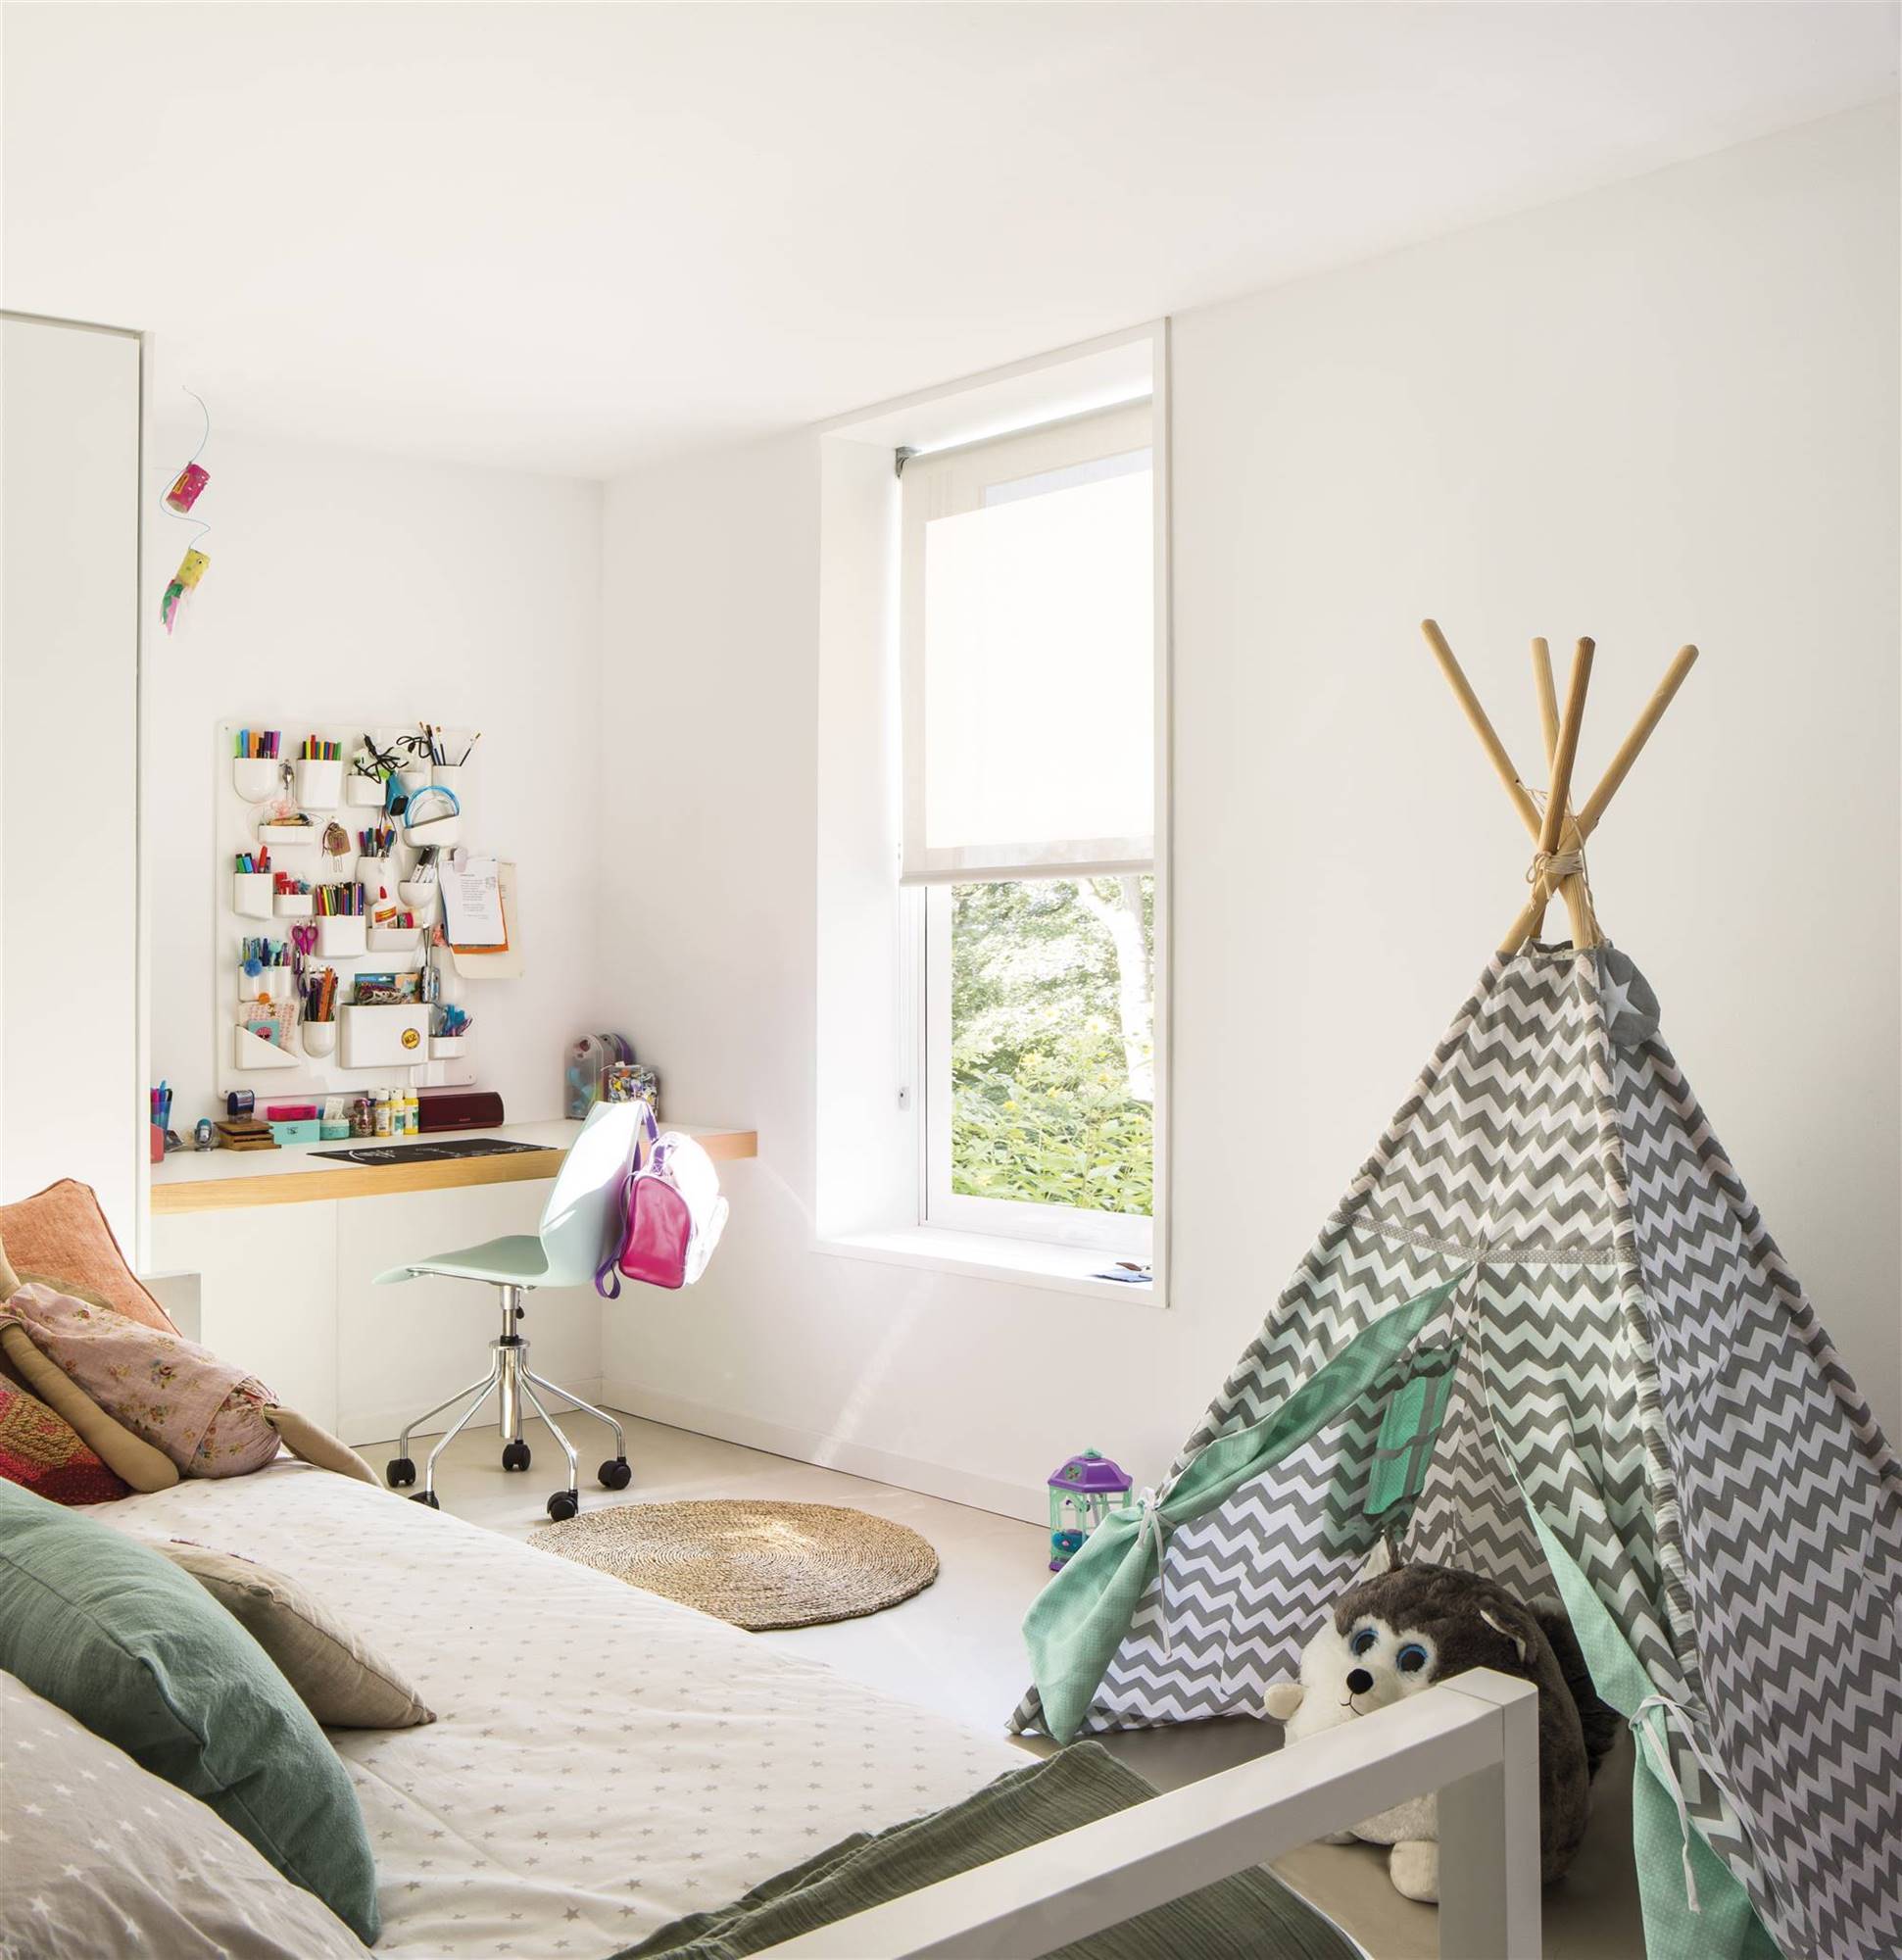 Dormitorio infantil con tipi para niños con motivos geométricos. 